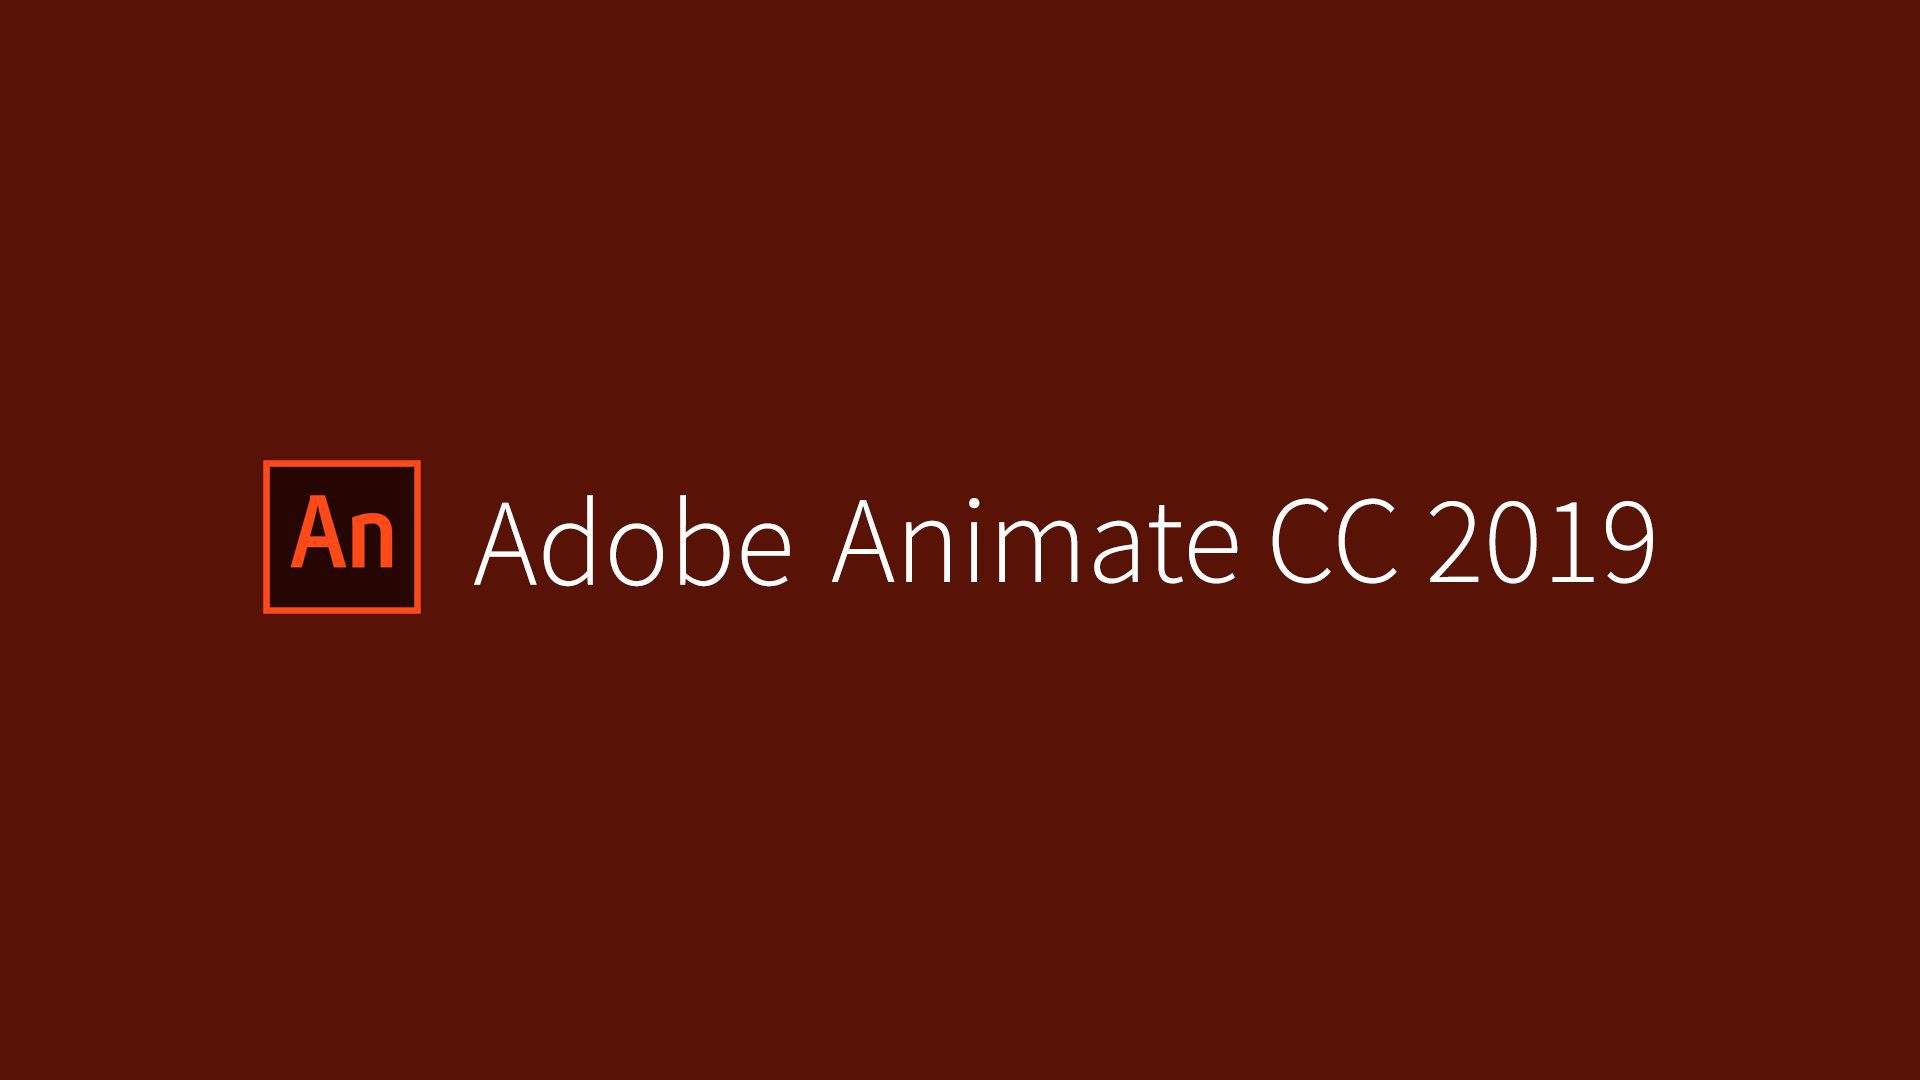 Adobe Animate CC 2019 Free Download - My Software Free